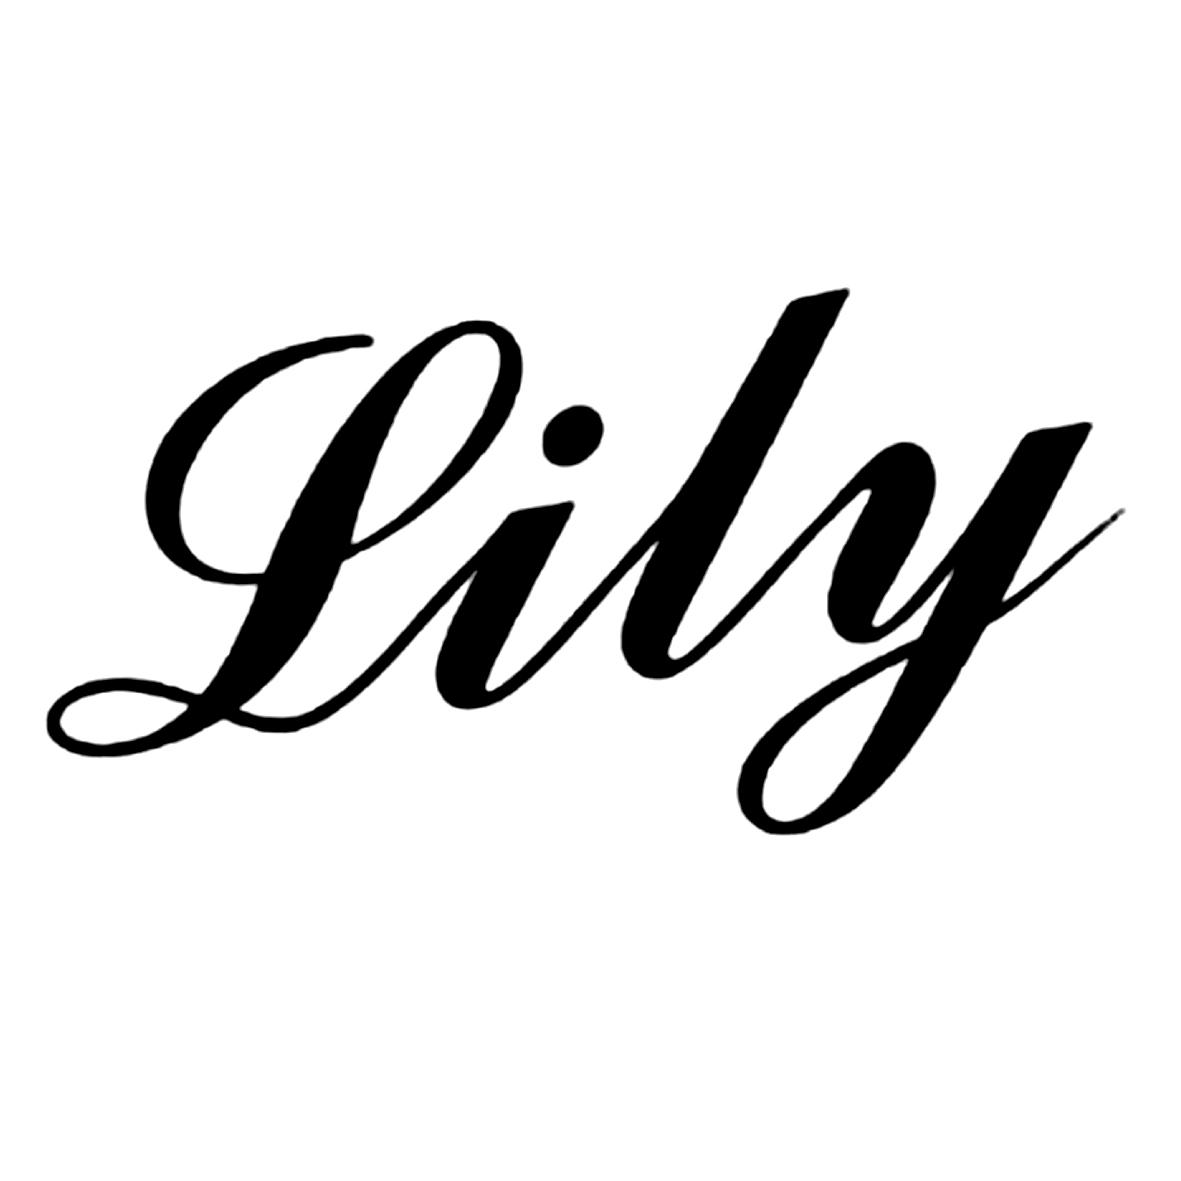 lily签名设计图片